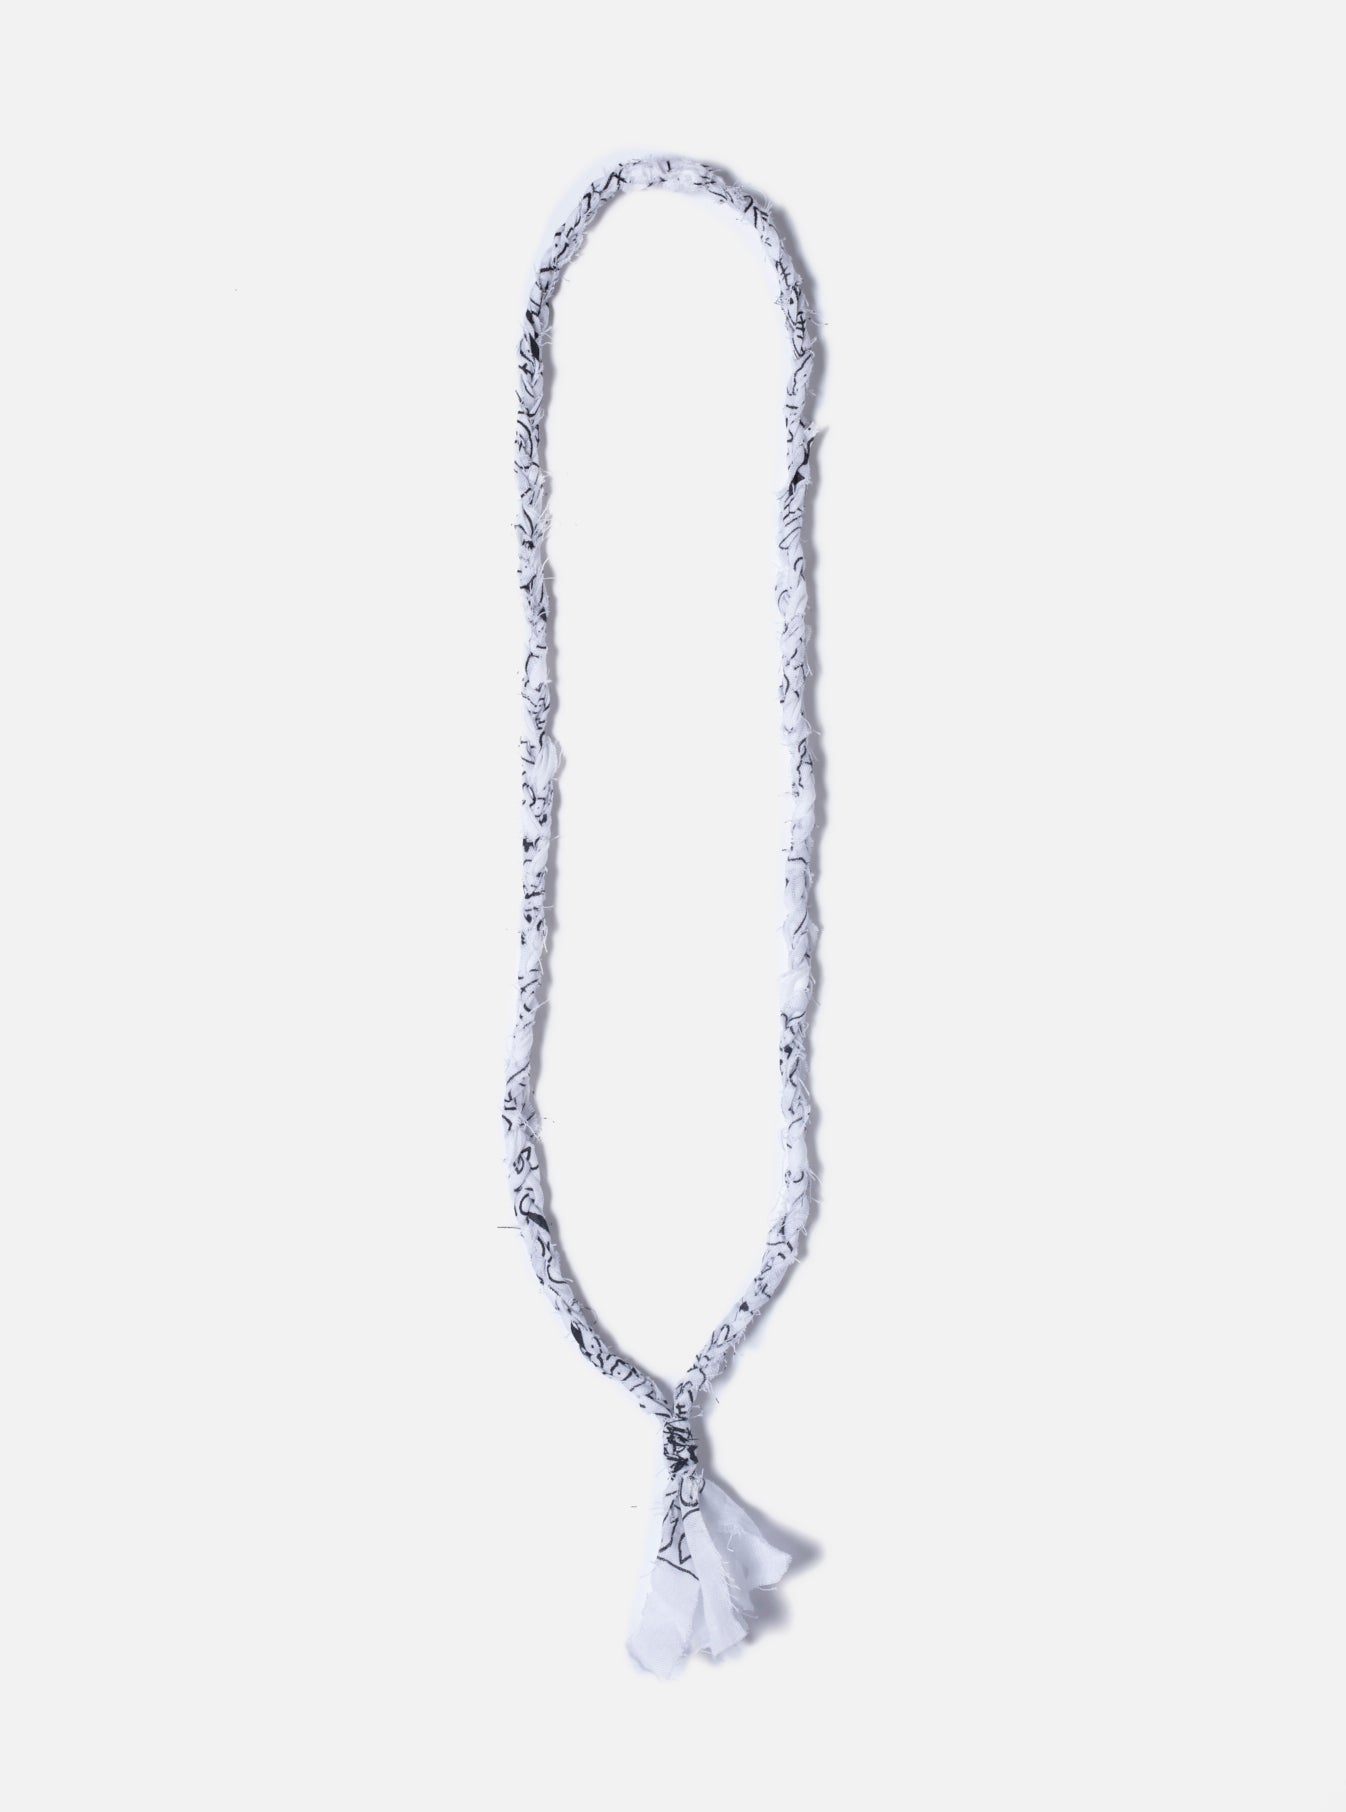 Hanami of Rome Bandana Necklace/Bracelet #24